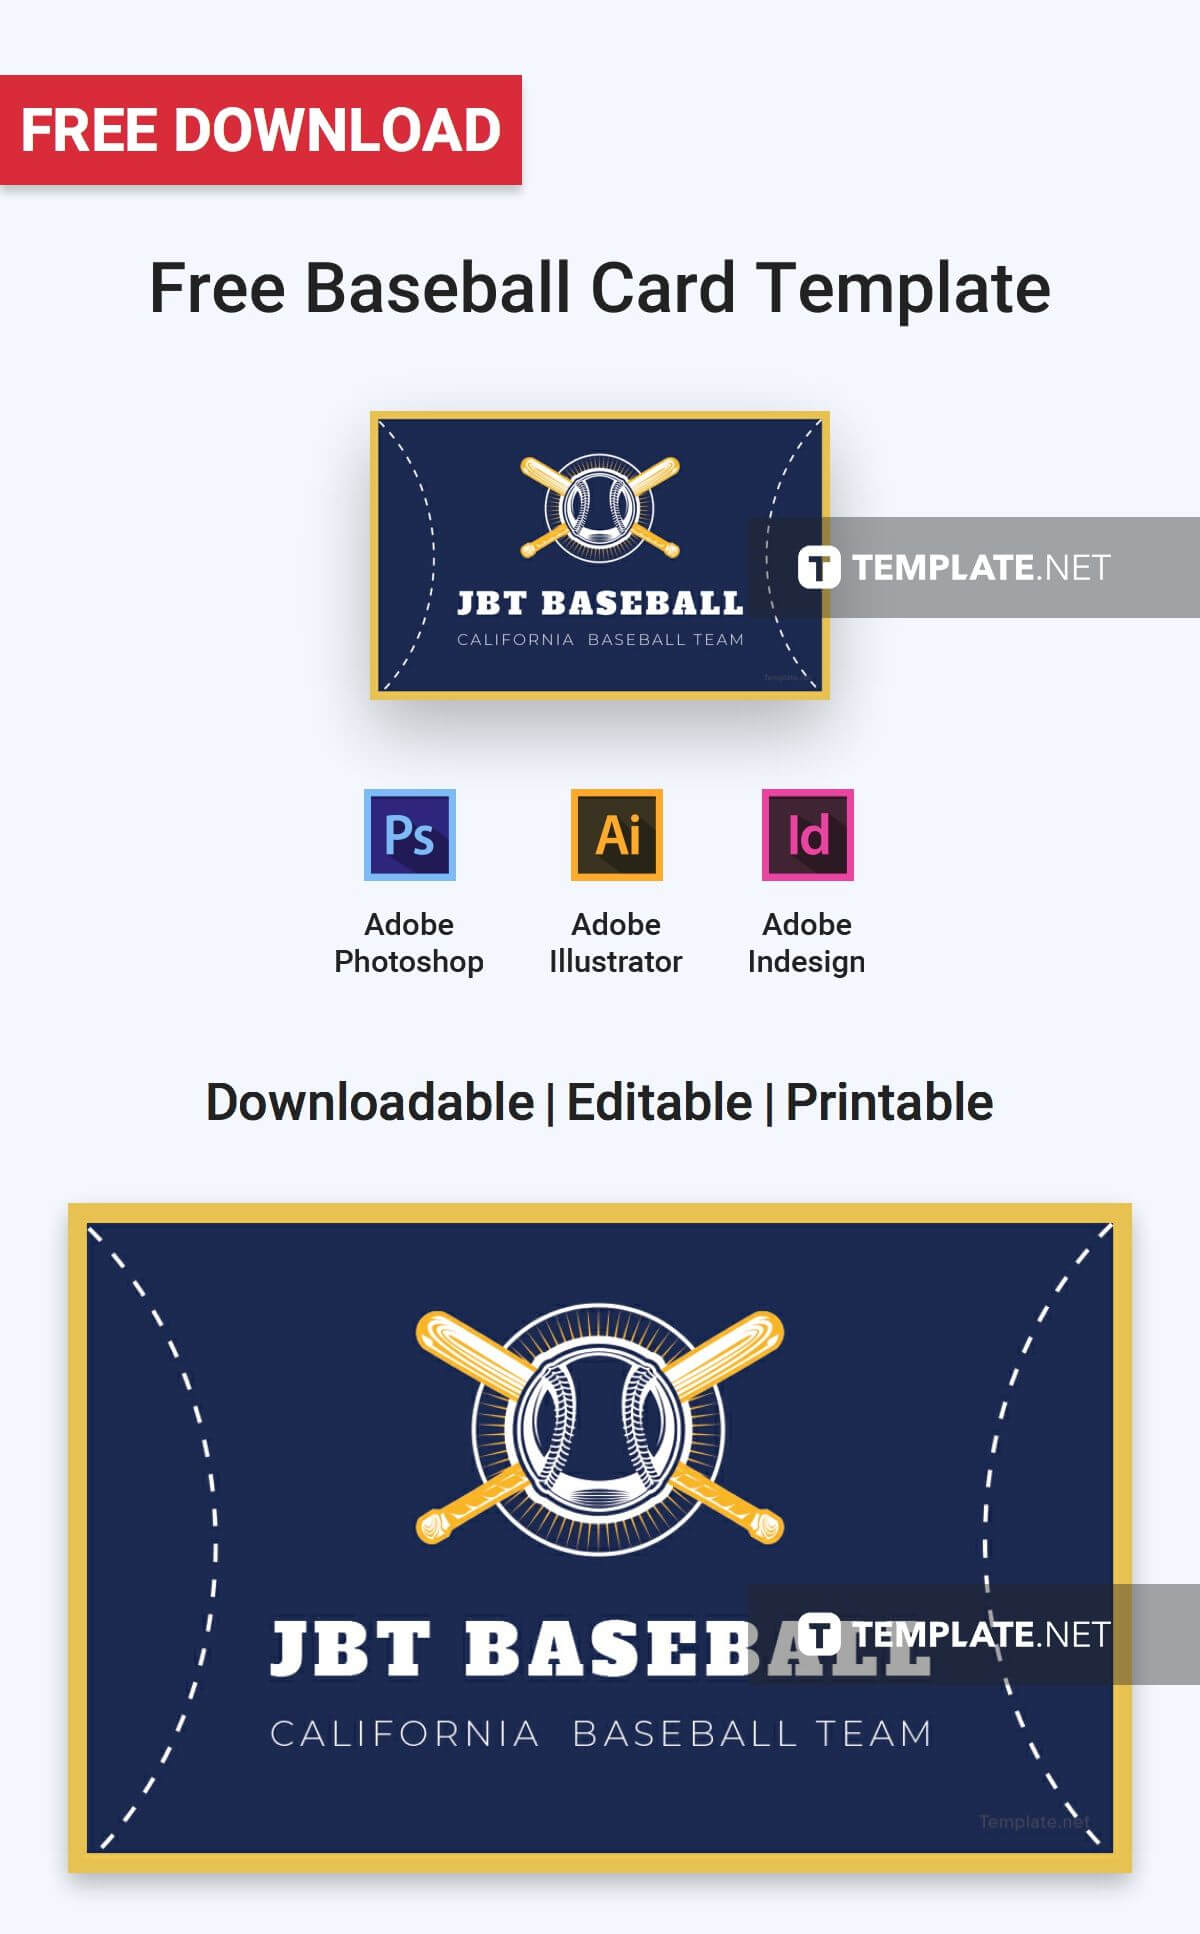 Free Baseball Card | Card Templates & Designs 2019 Inside Baseball Card Template Microsoft Word